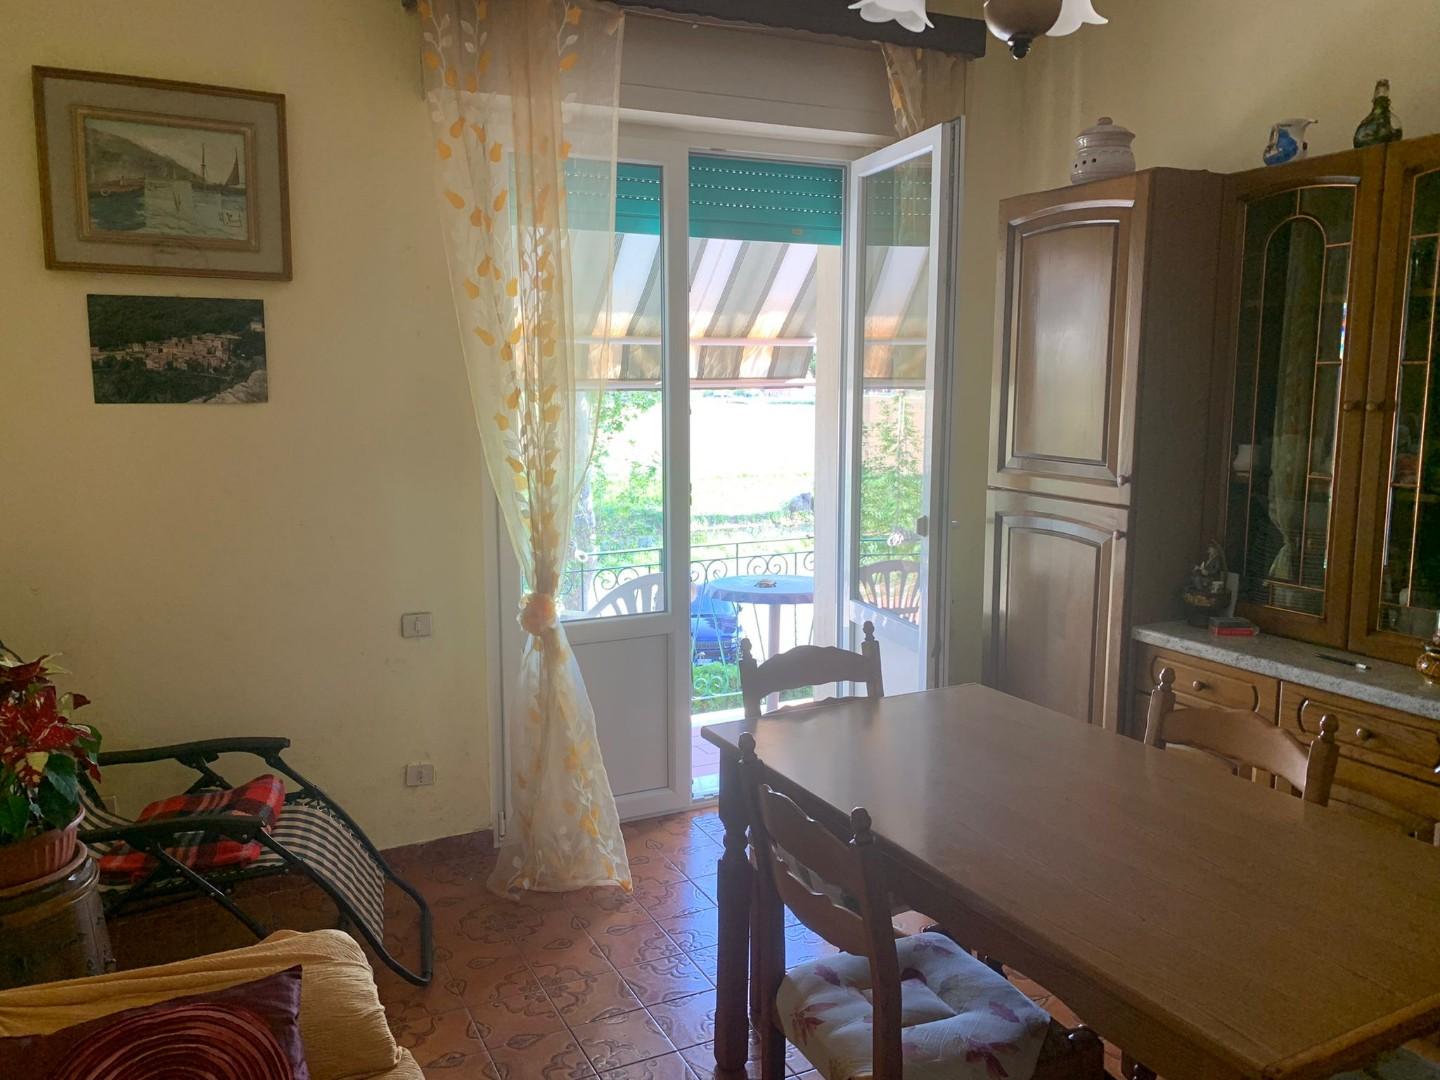 Apartment for sale in Bibbona (LI)